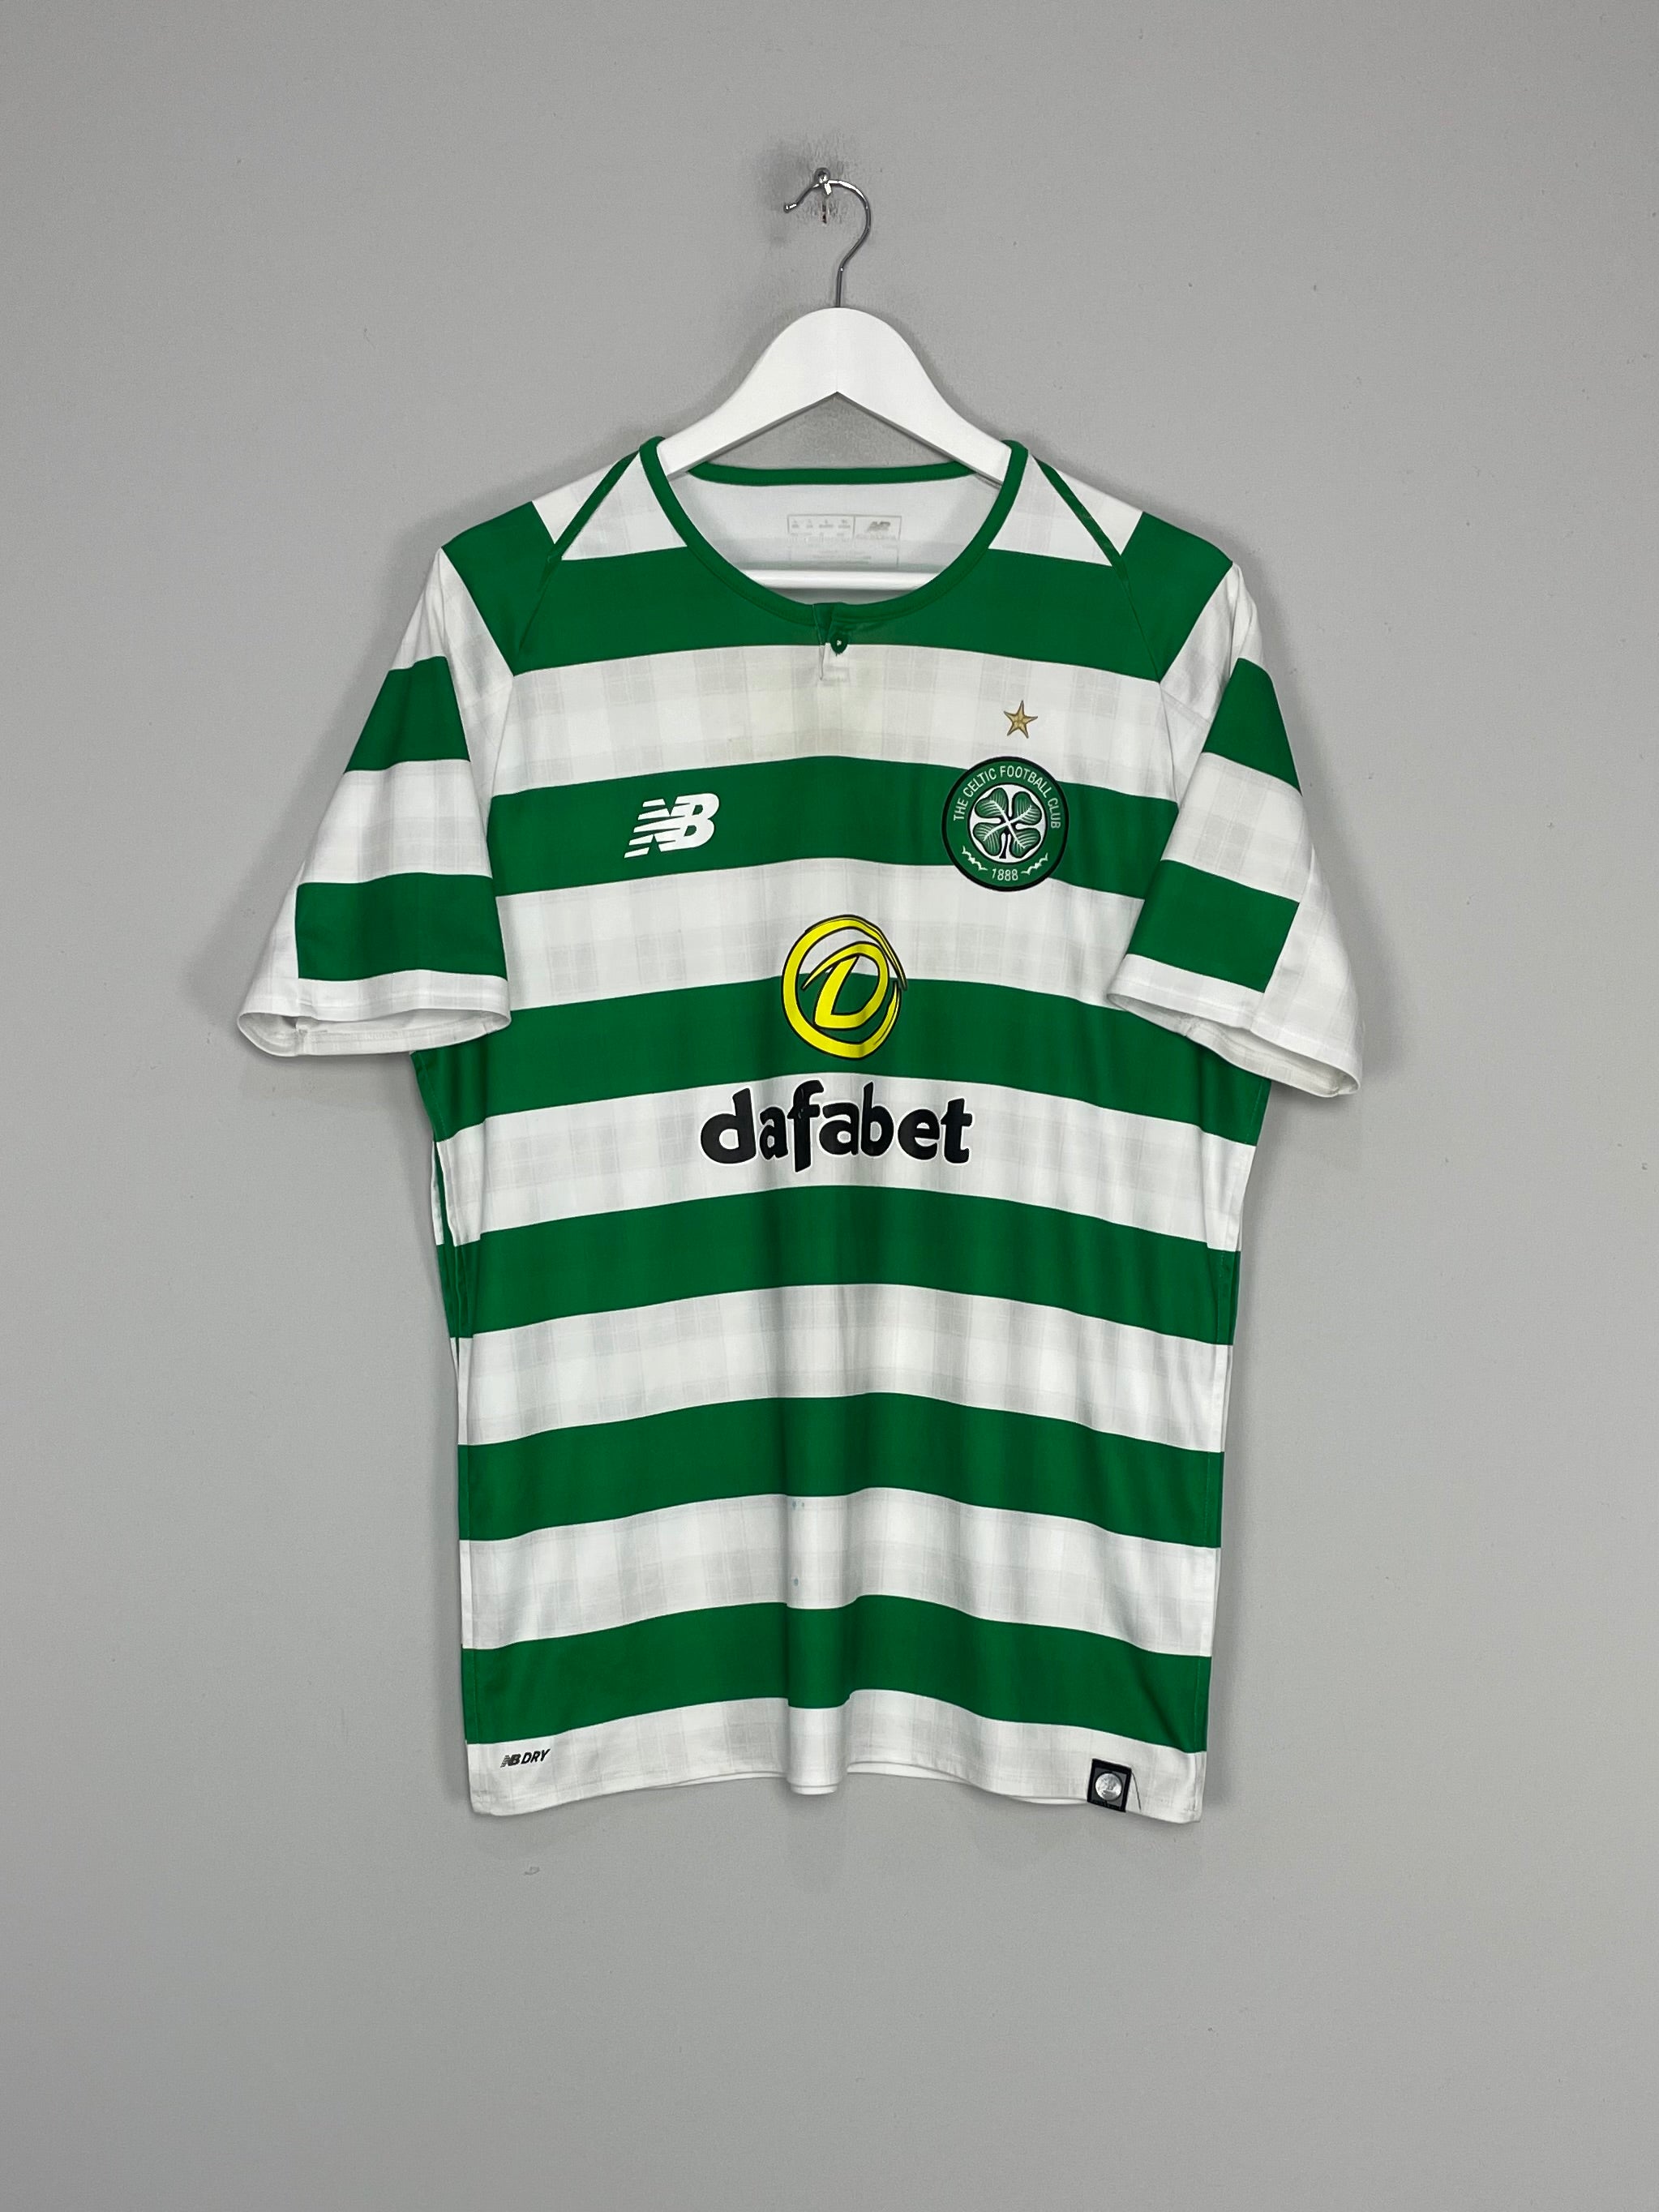 Celtic 2017 - 2018 training football shirt jersey New Balance size XL